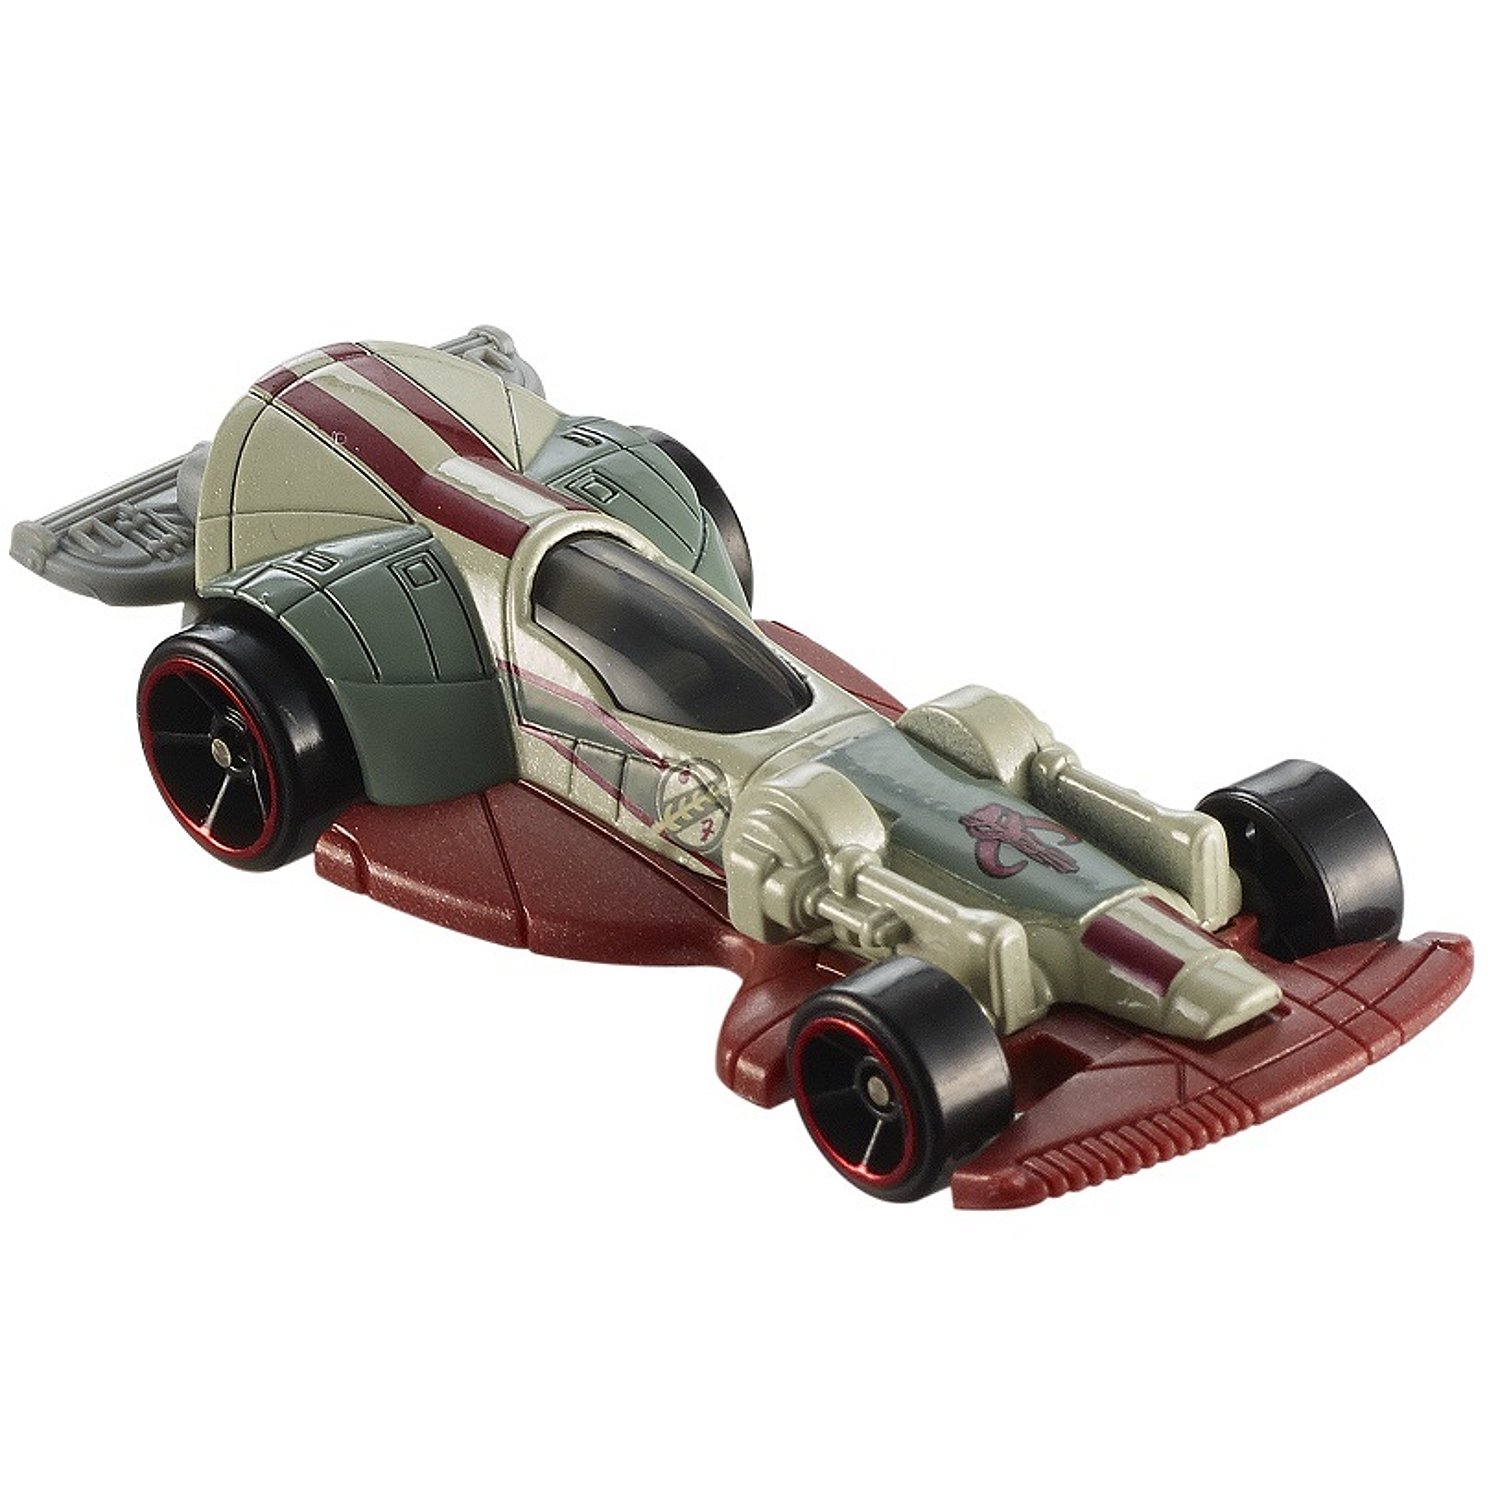 Машинка Hot Wheels Star Wars «Звездный транспорт»